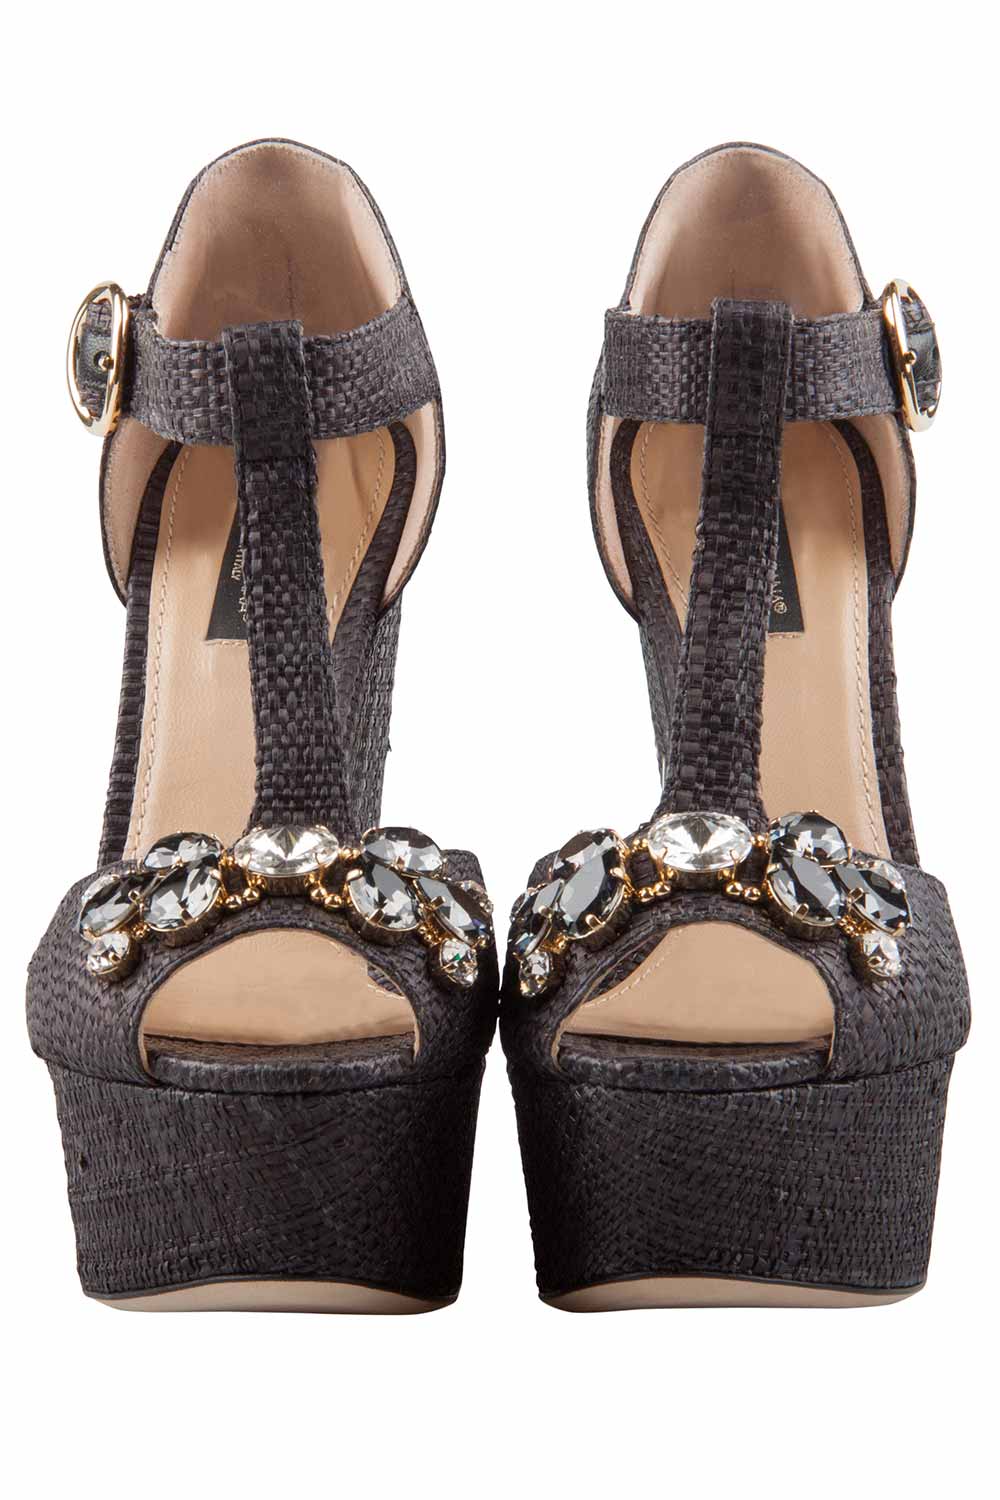 

Dolce and Gabbana Black Crystal Embellished Raffia T Strap Wedge Peep Toe Sandals Size